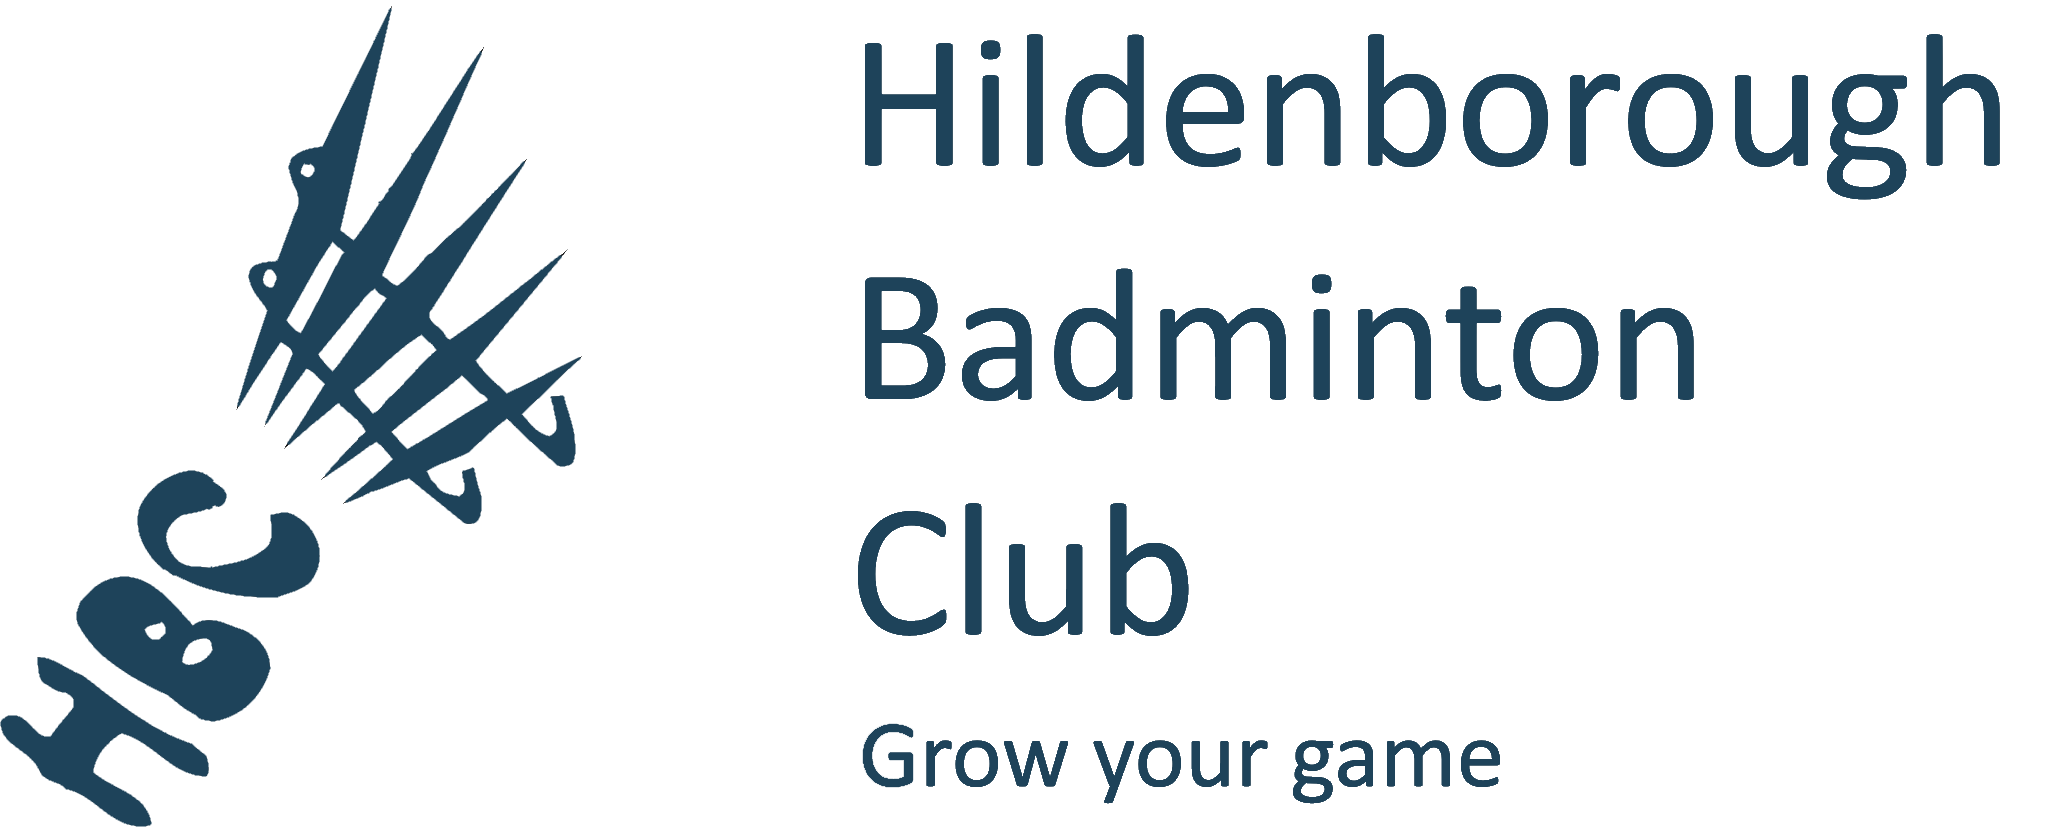 Hildenborough Badminton Club